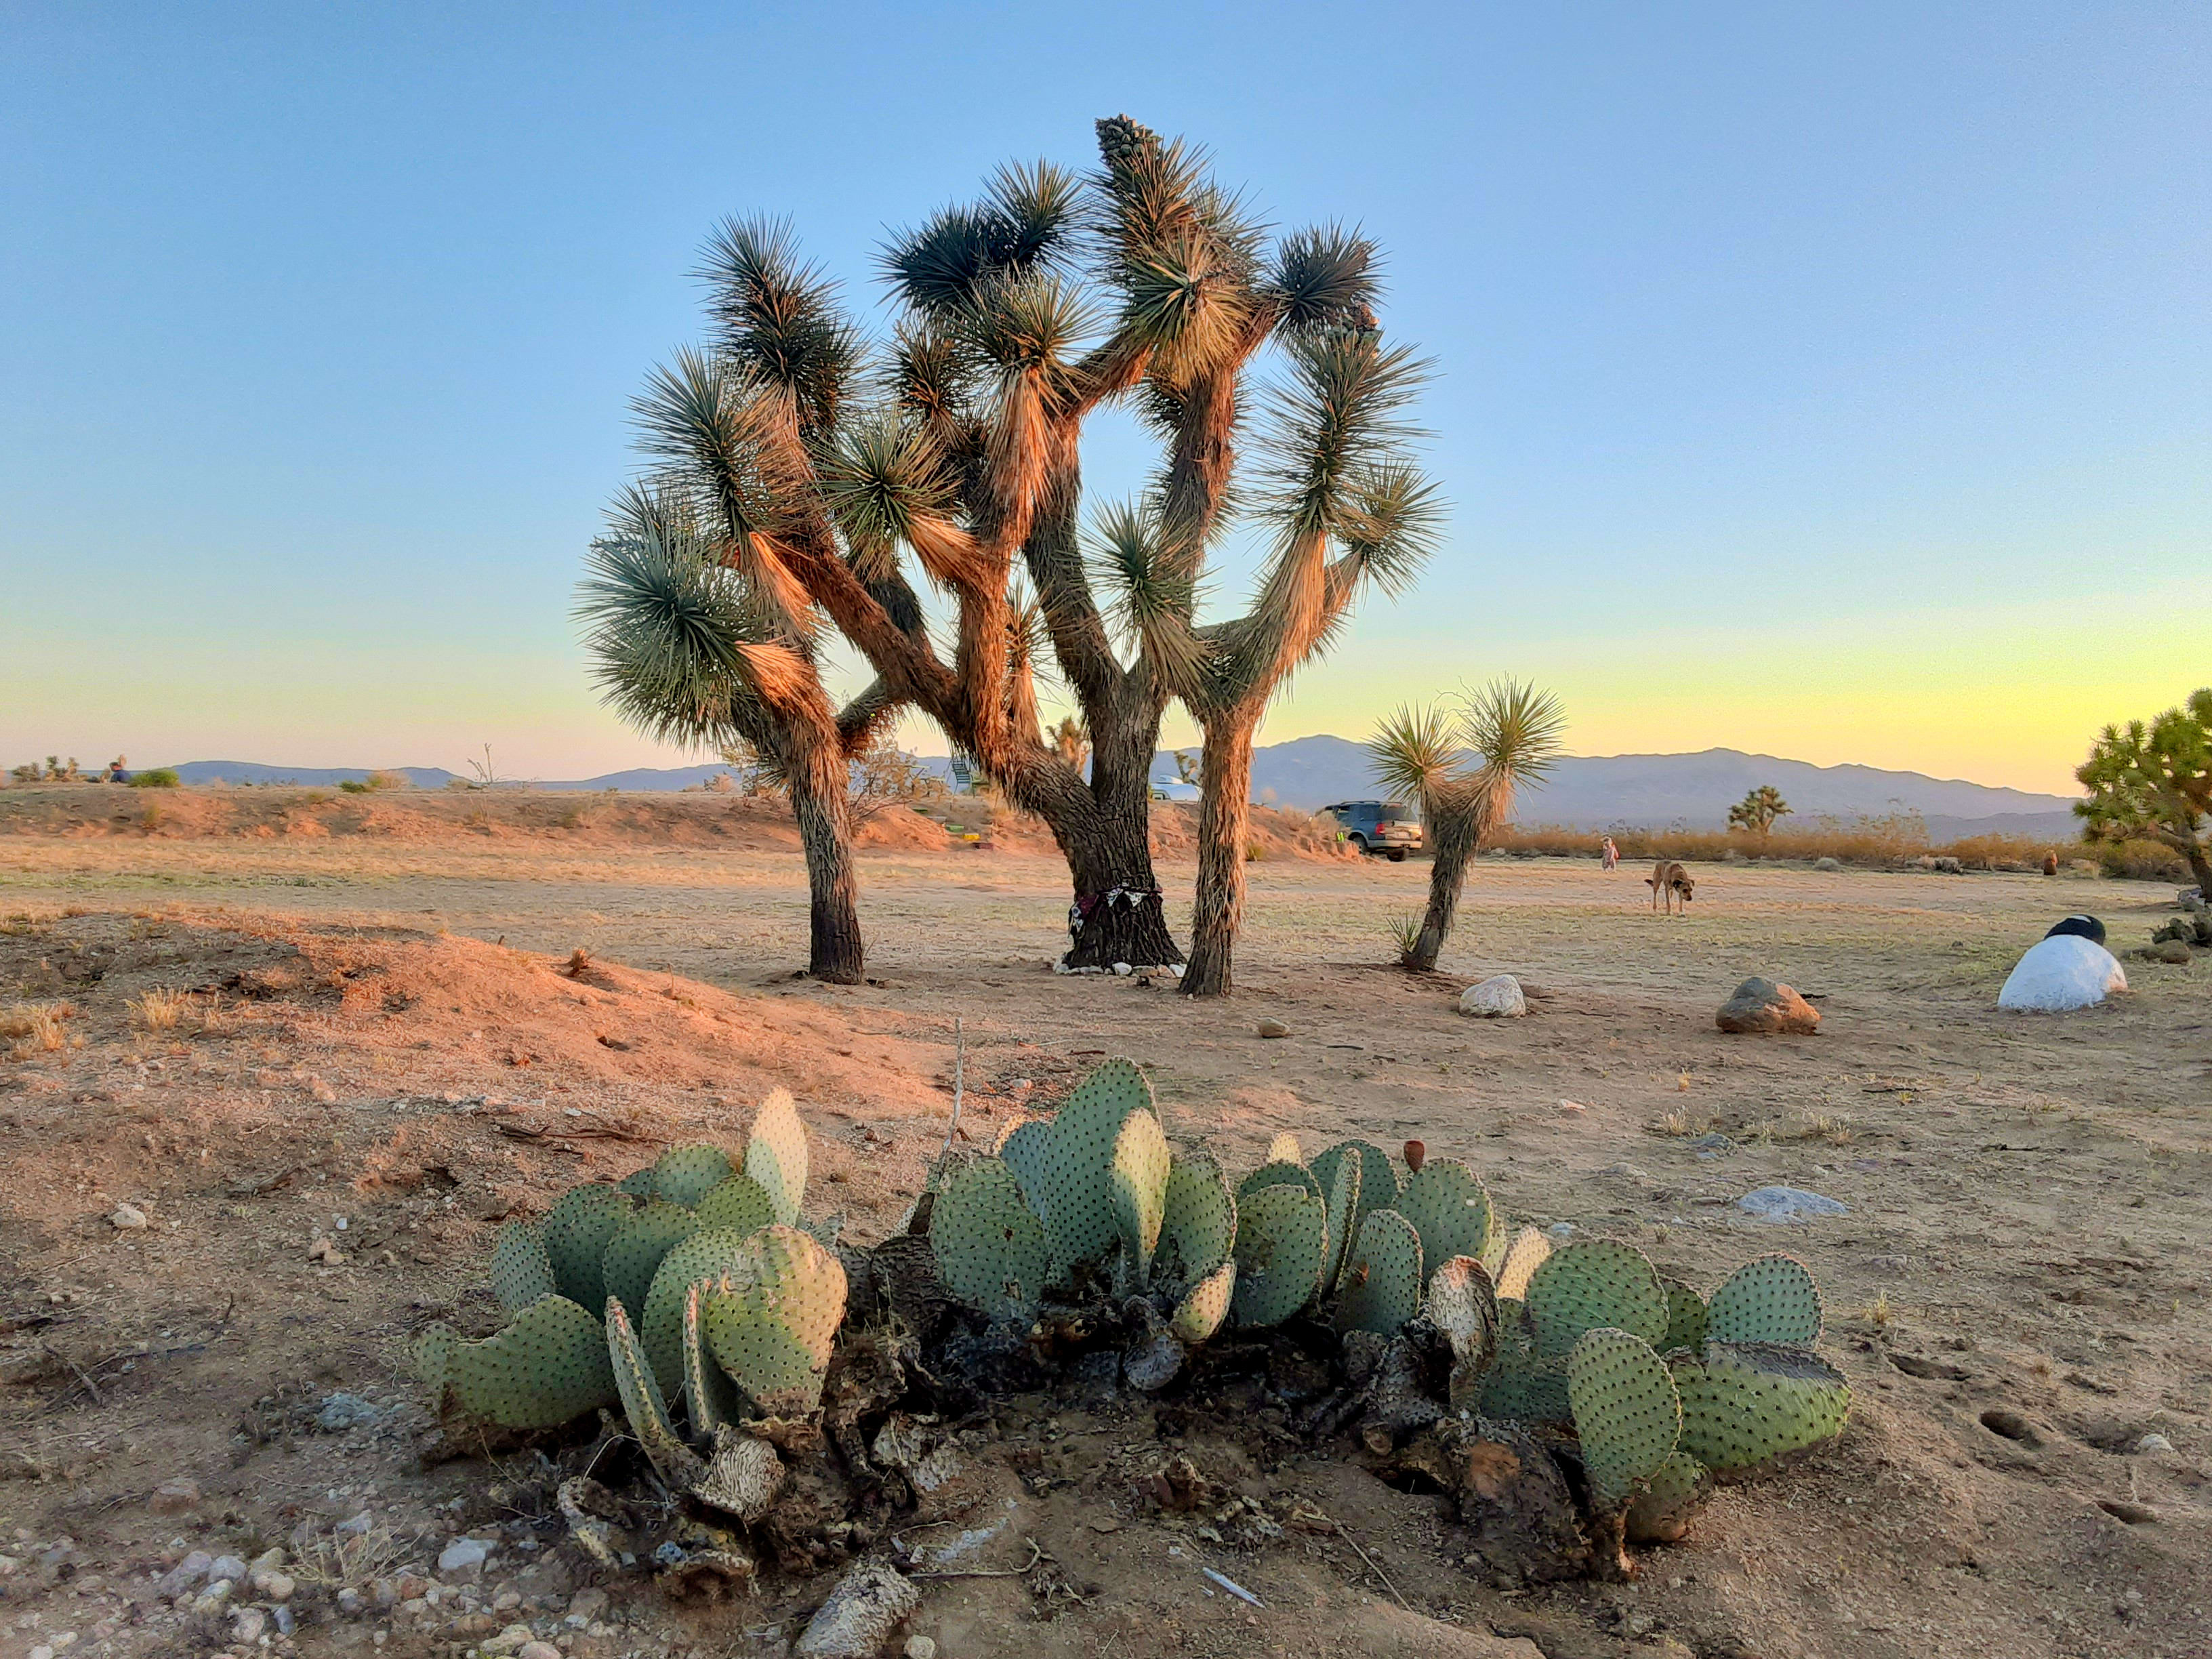 40 Acres of Desert Tranquility